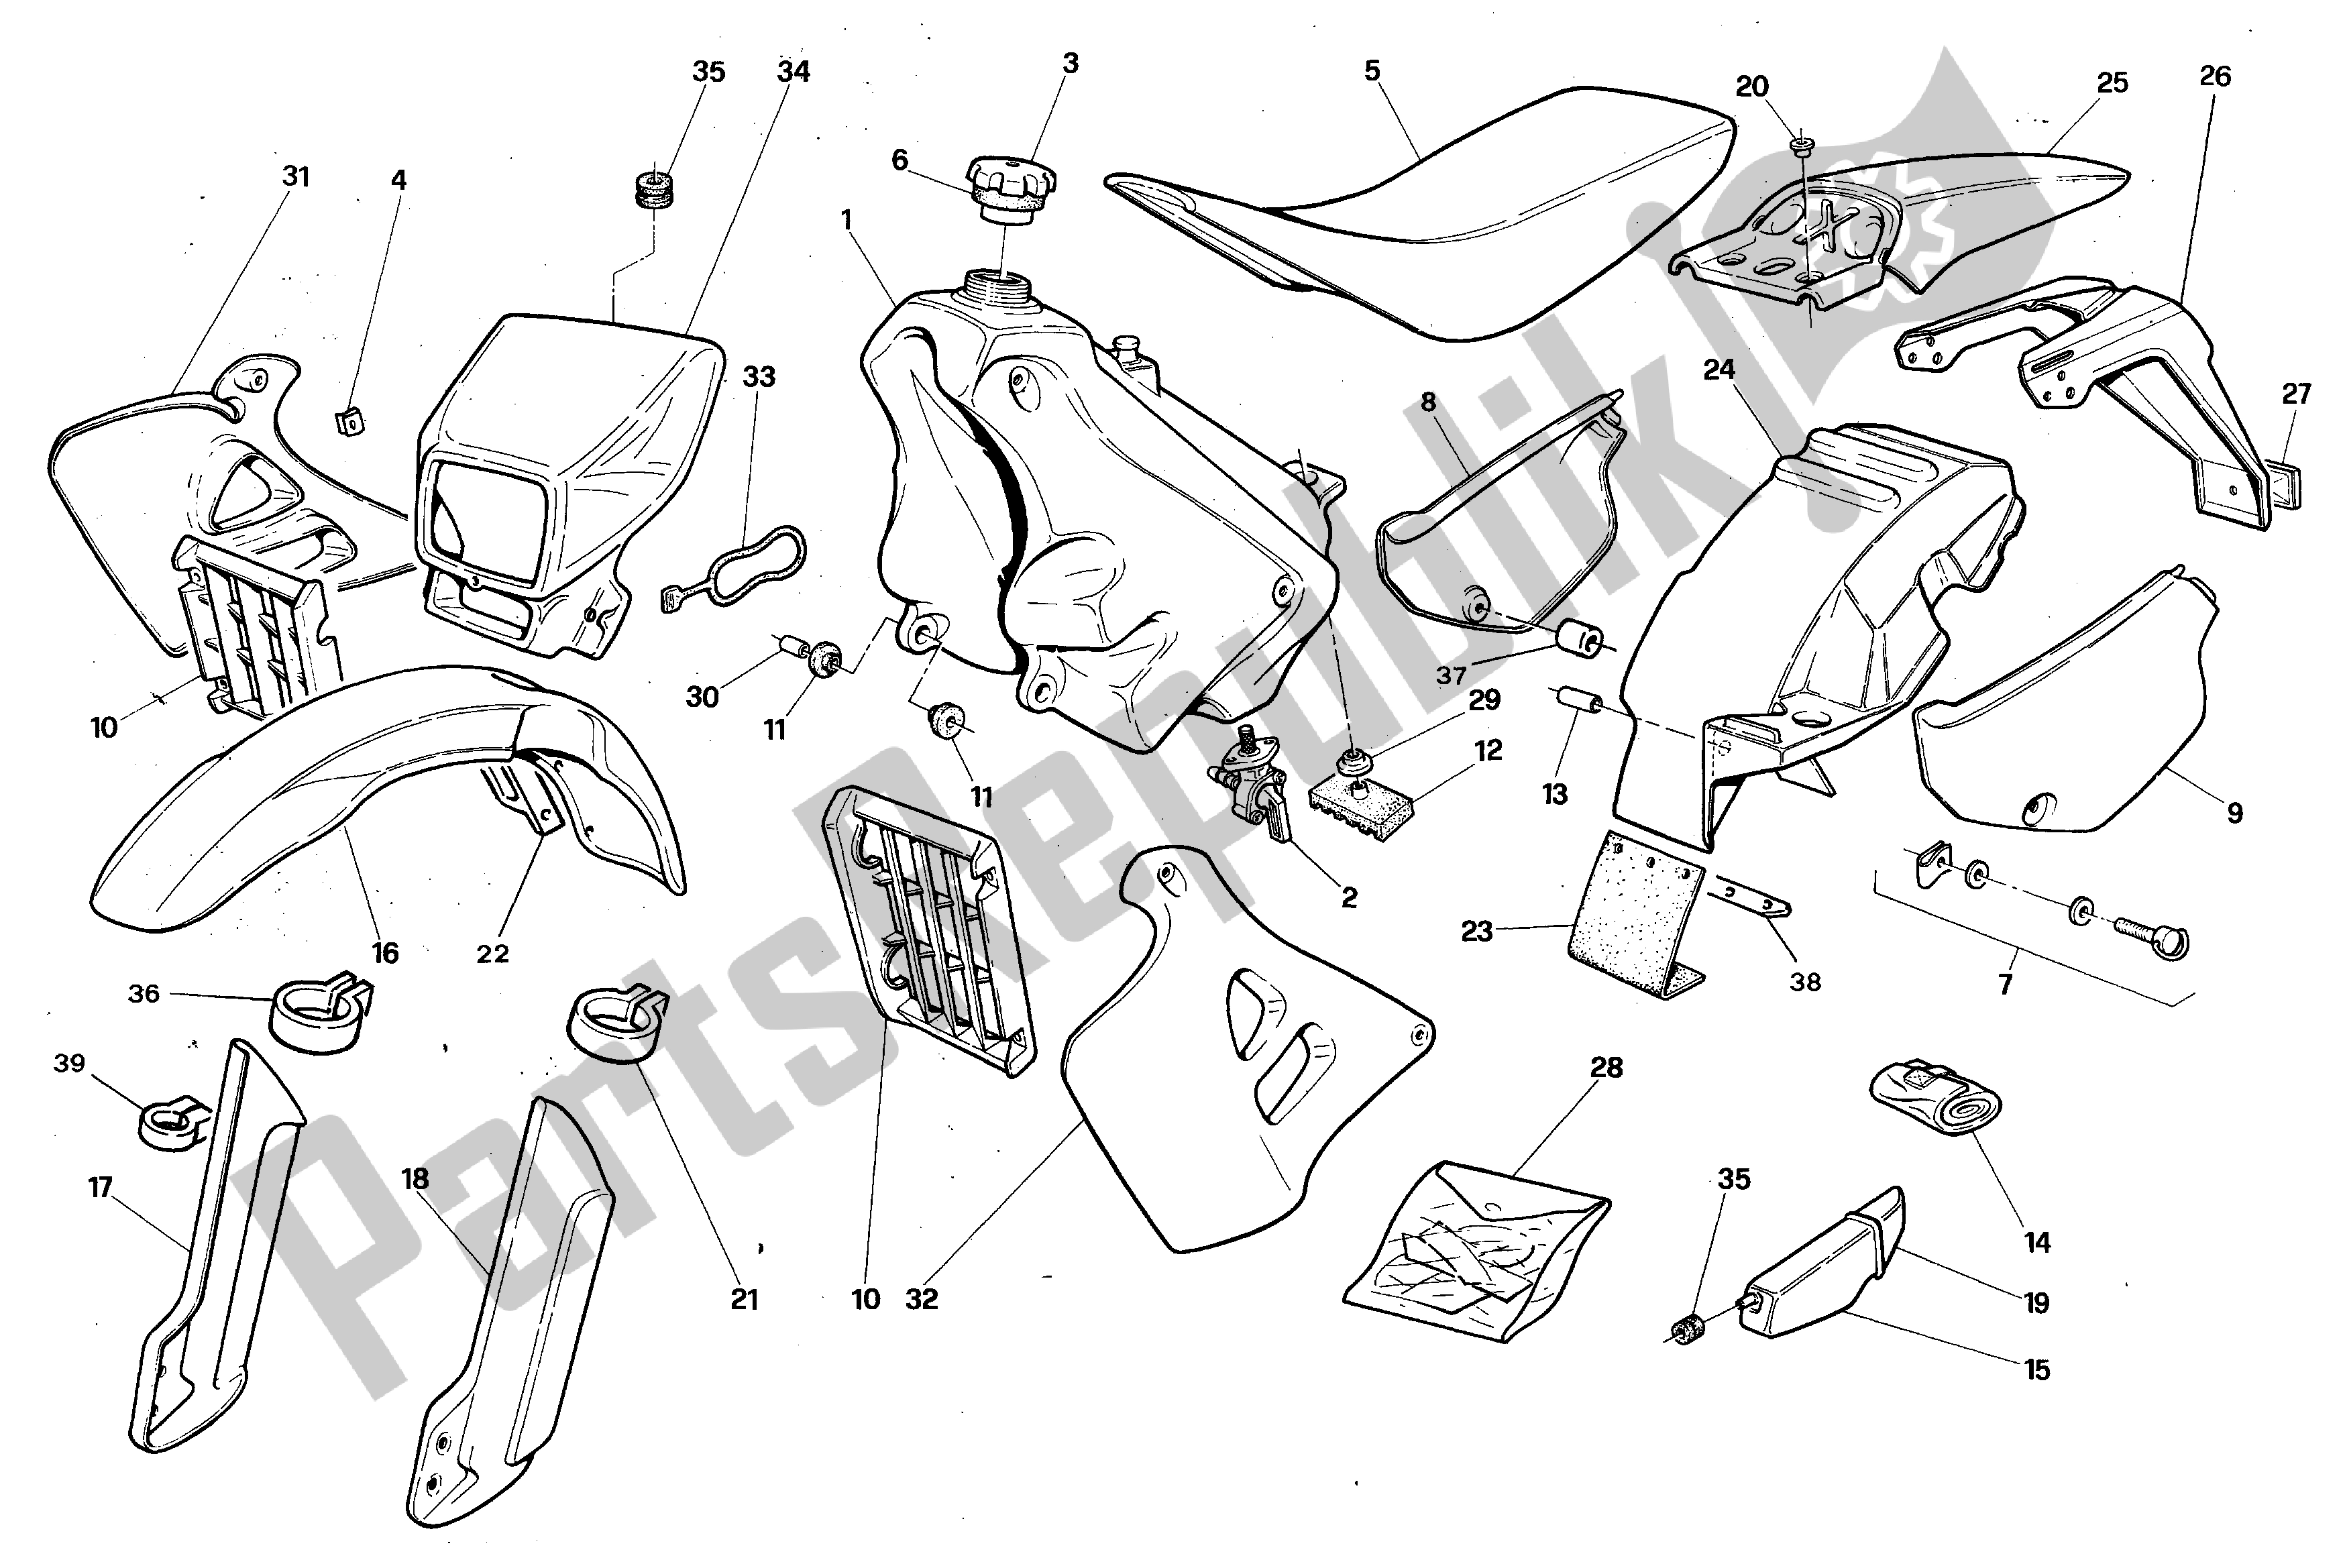 All parts for the Body of the Aprilia RX 125 1994 - 1998